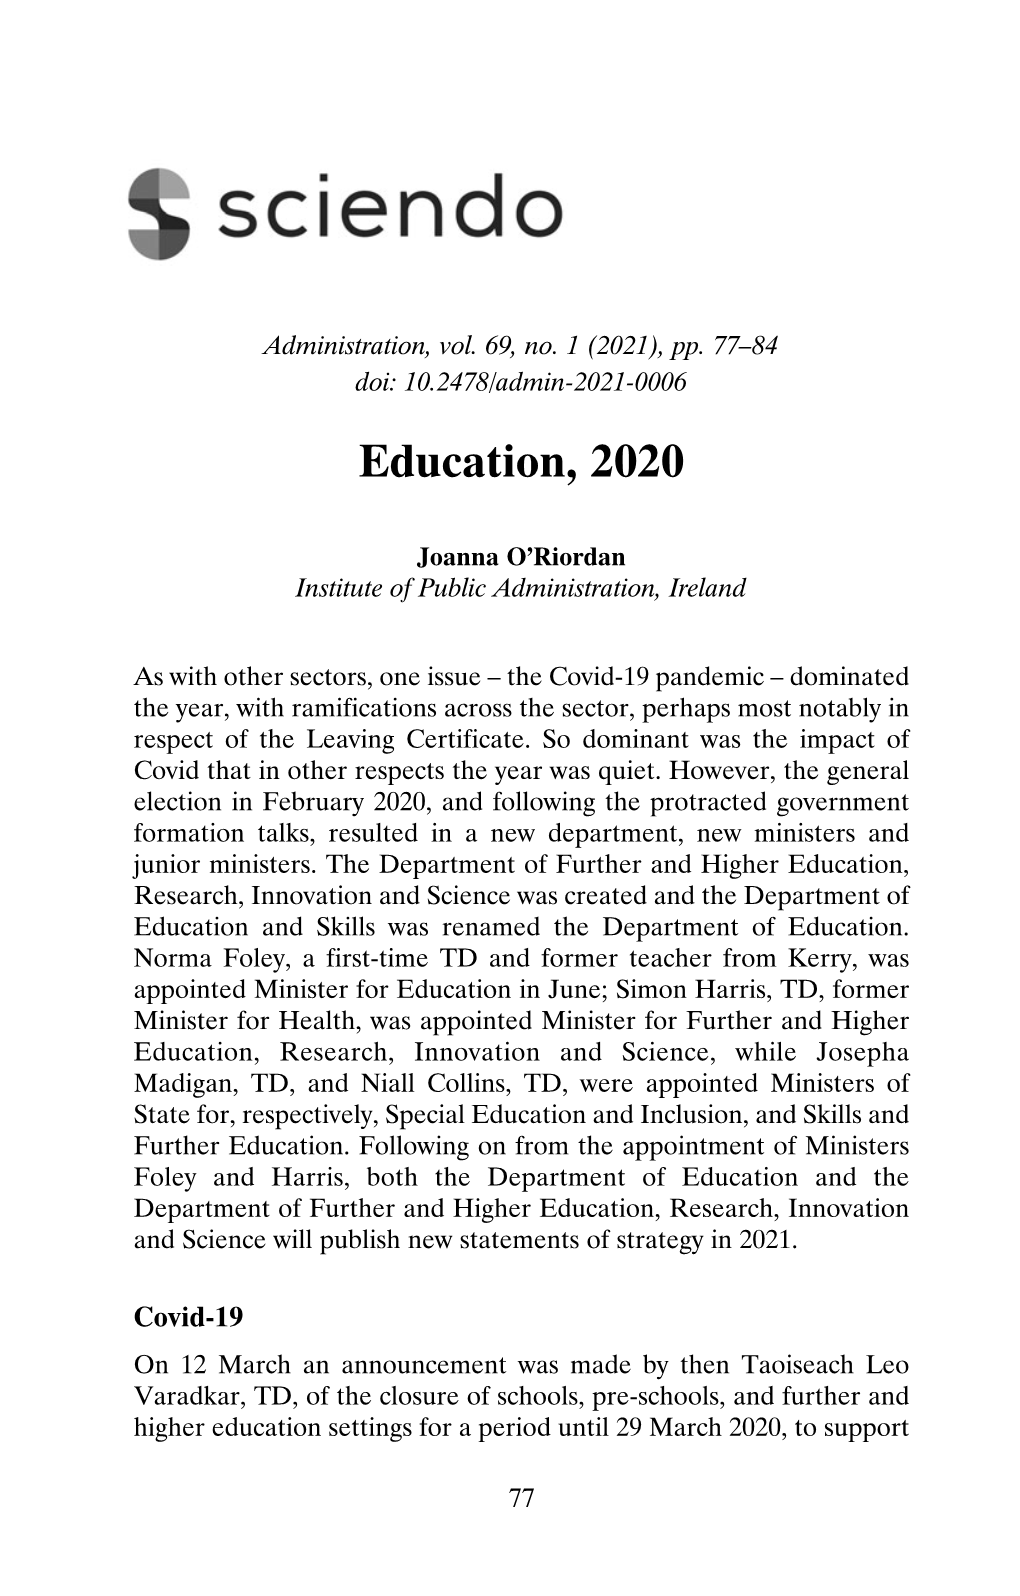 Education, 2020